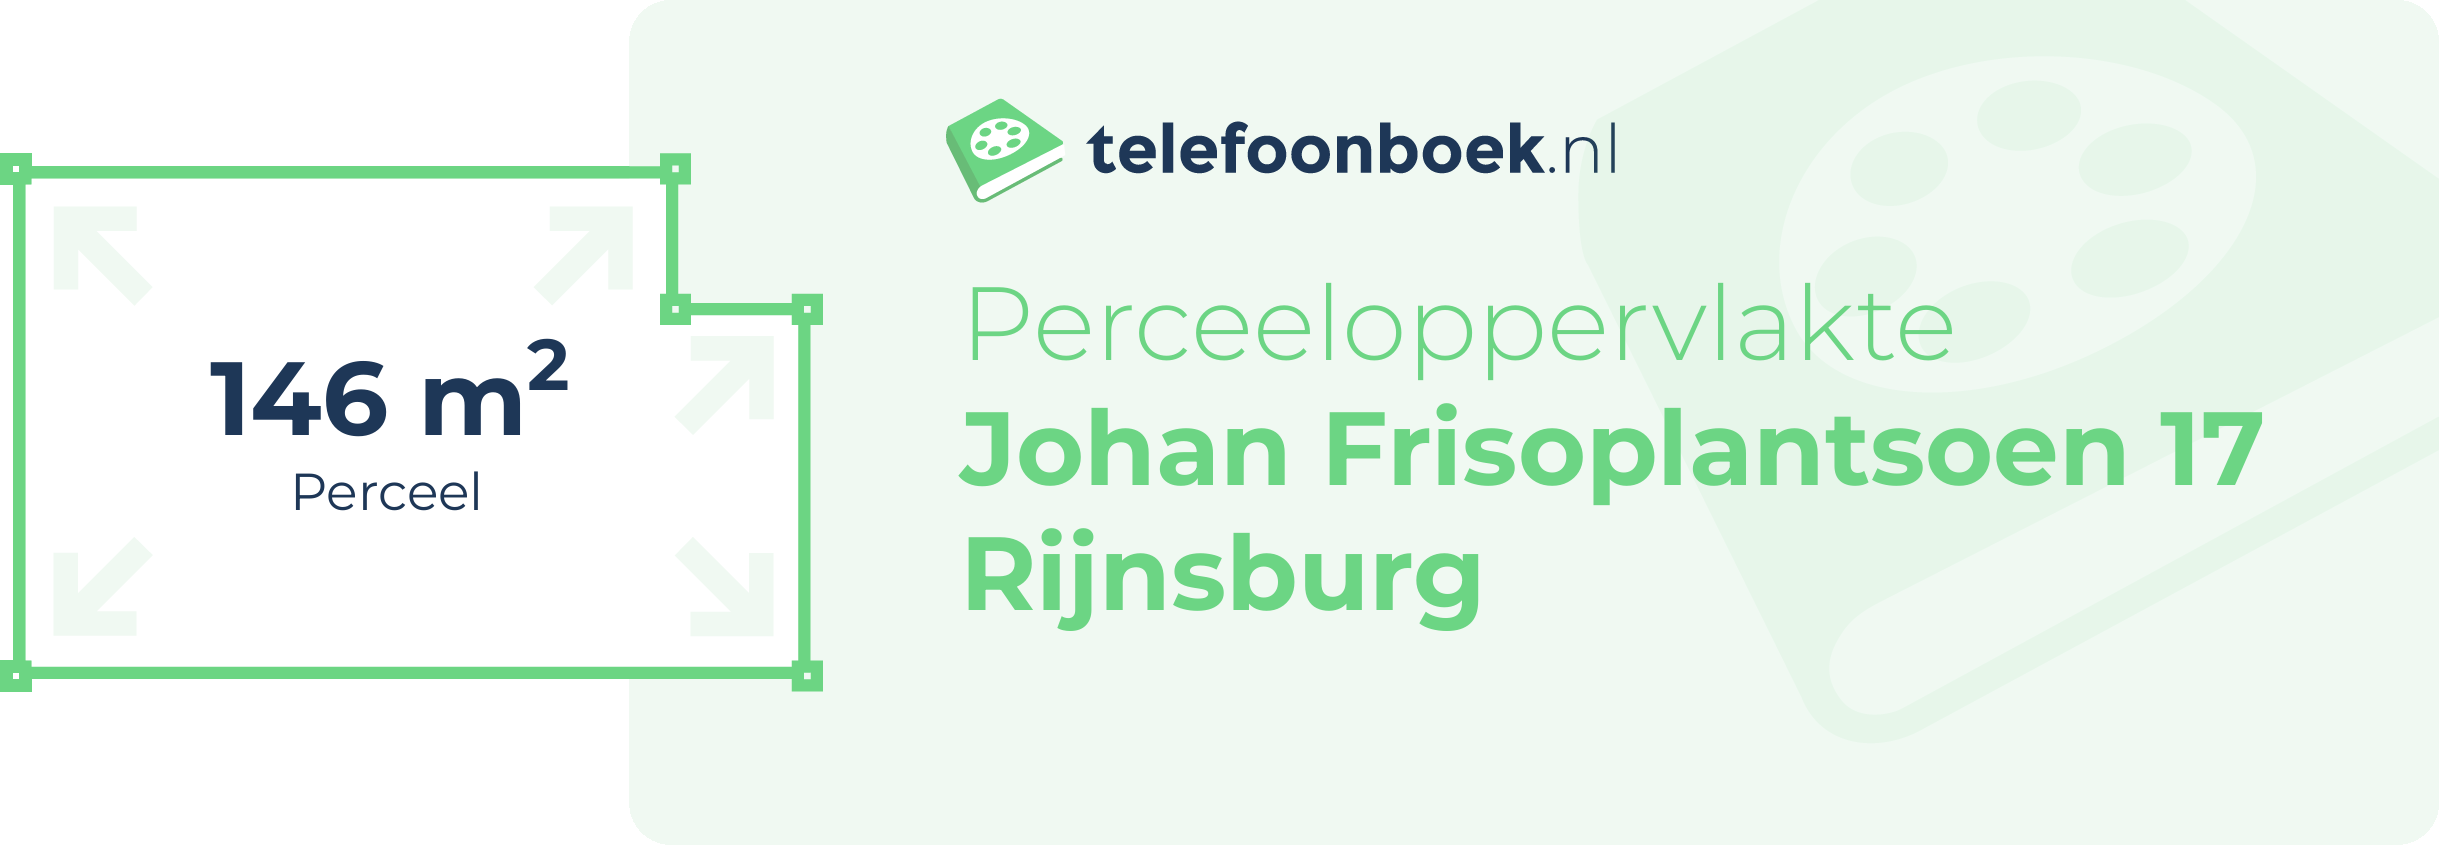 Perceeloppervlakte Johan Frisoplantsoen 17 Rijnsburg